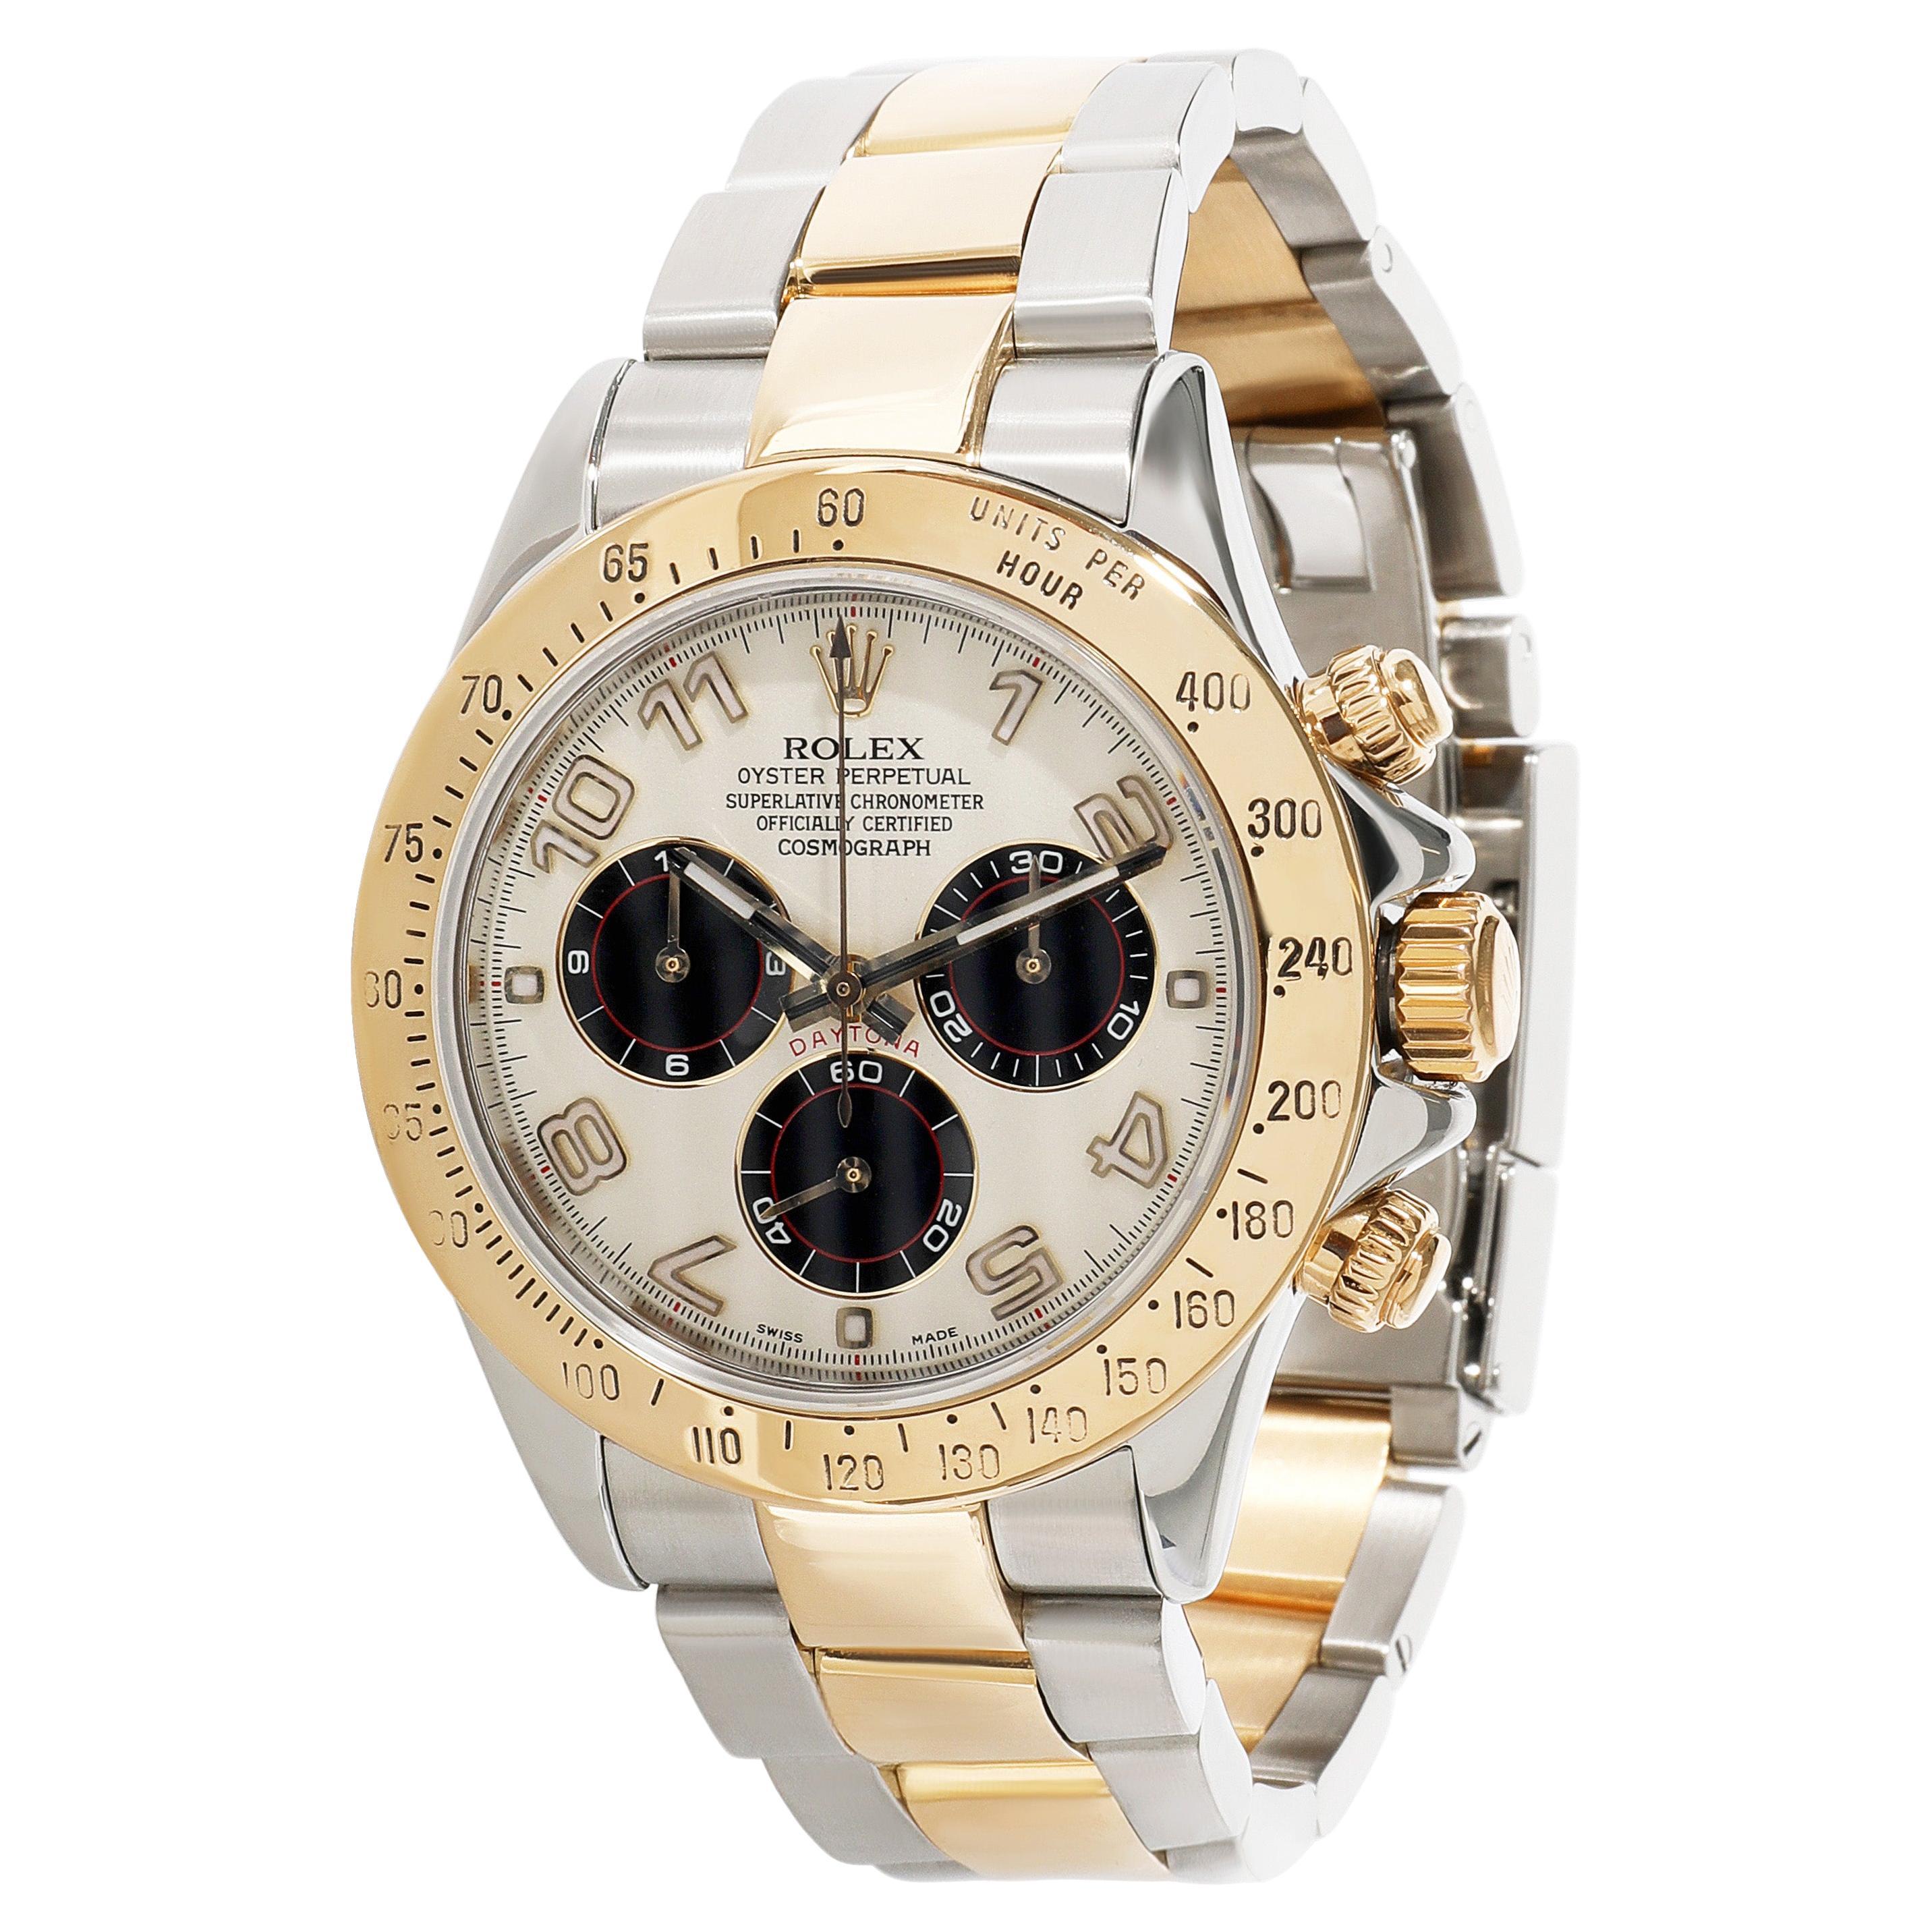 Rolex Daytona 116523 Men's Watch in Stainless Steel/Yellow Gold